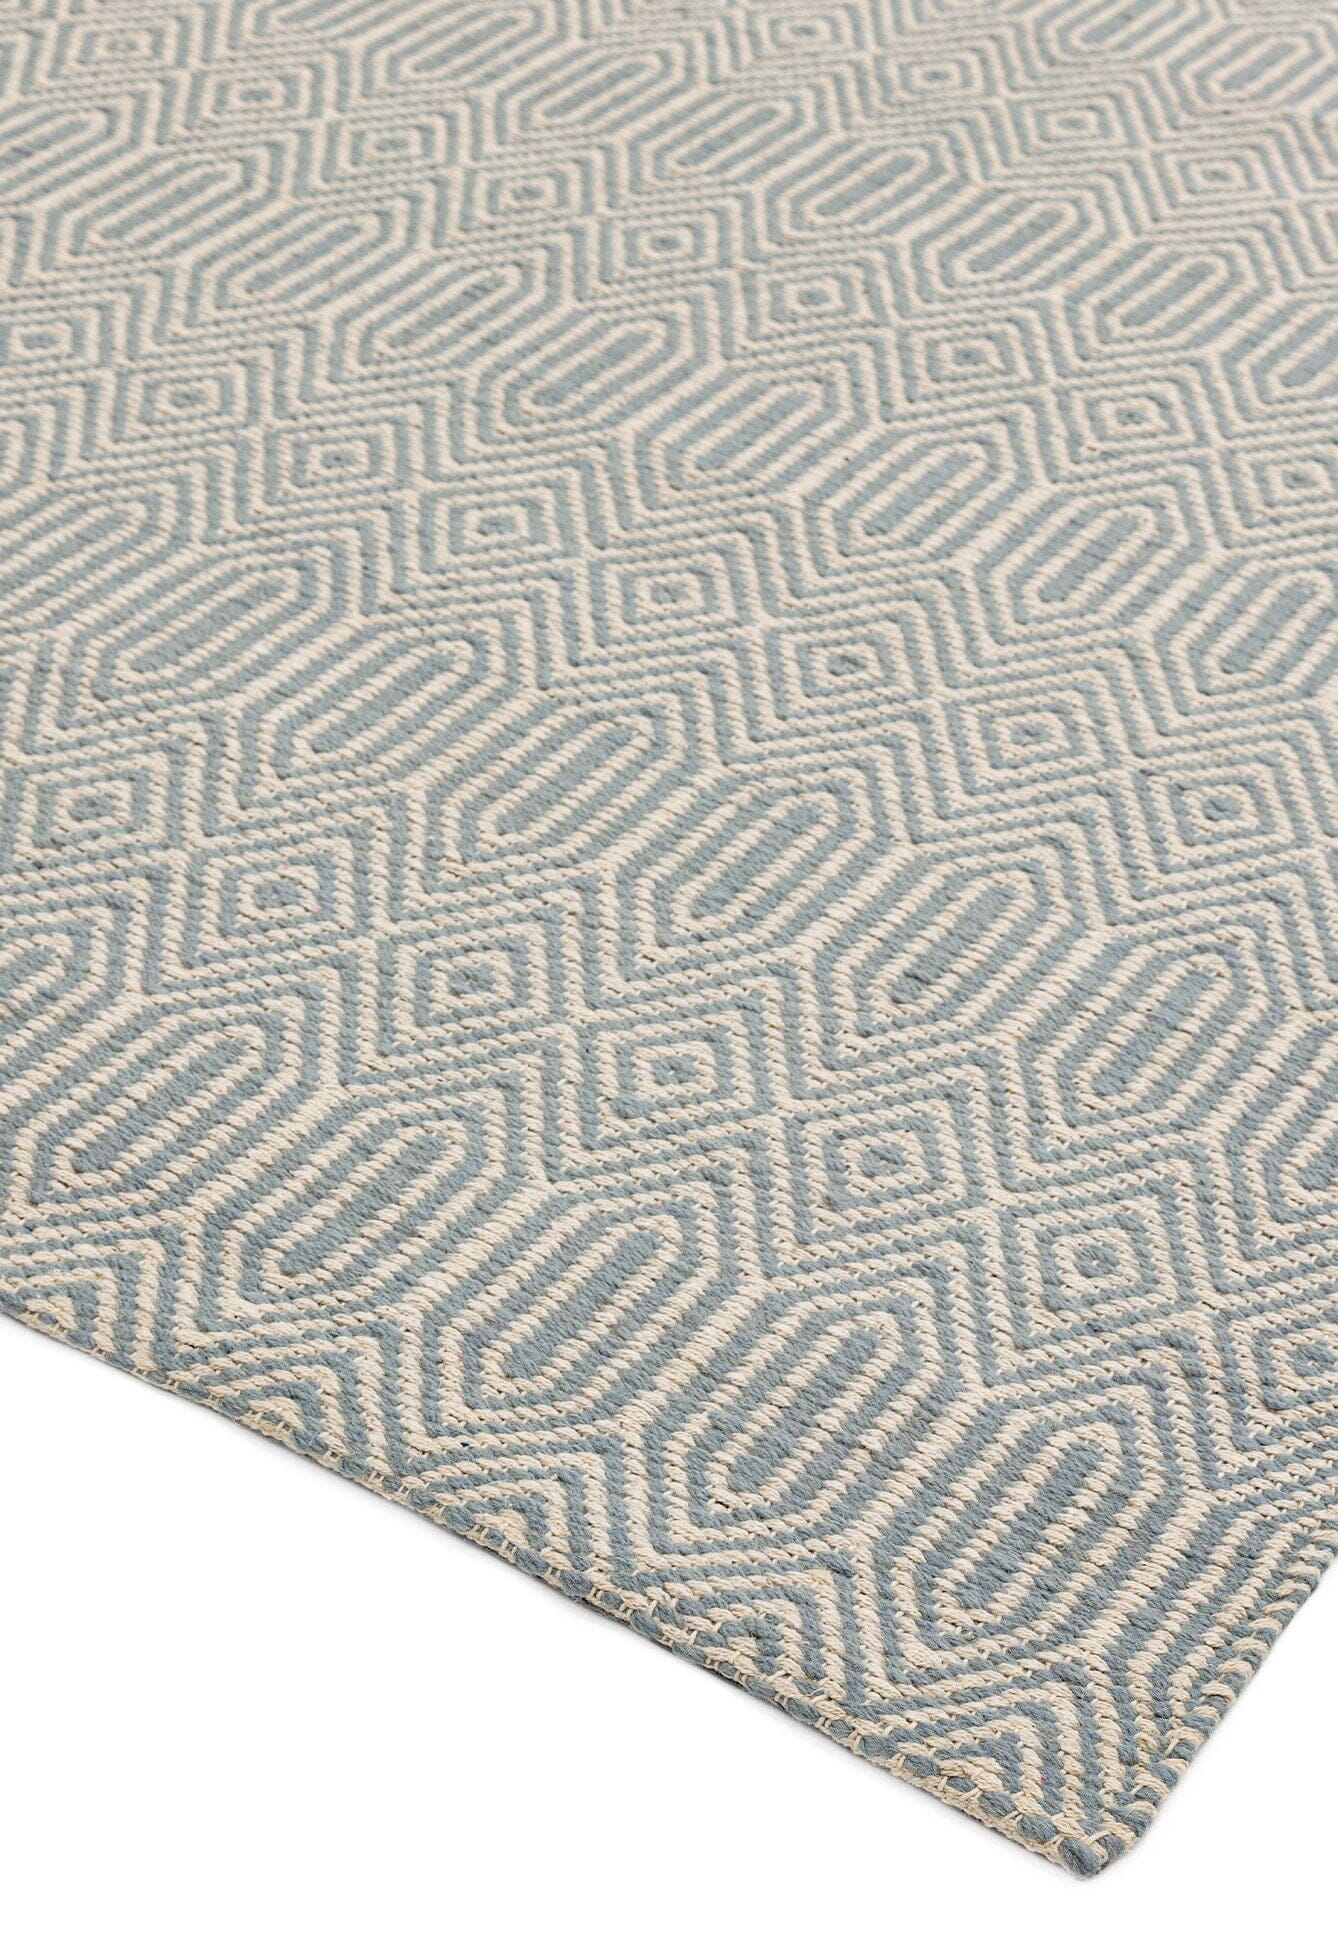 Asiatic Carpets Sloan Hand Woven Rug Duck Egg - 160 x 230cm